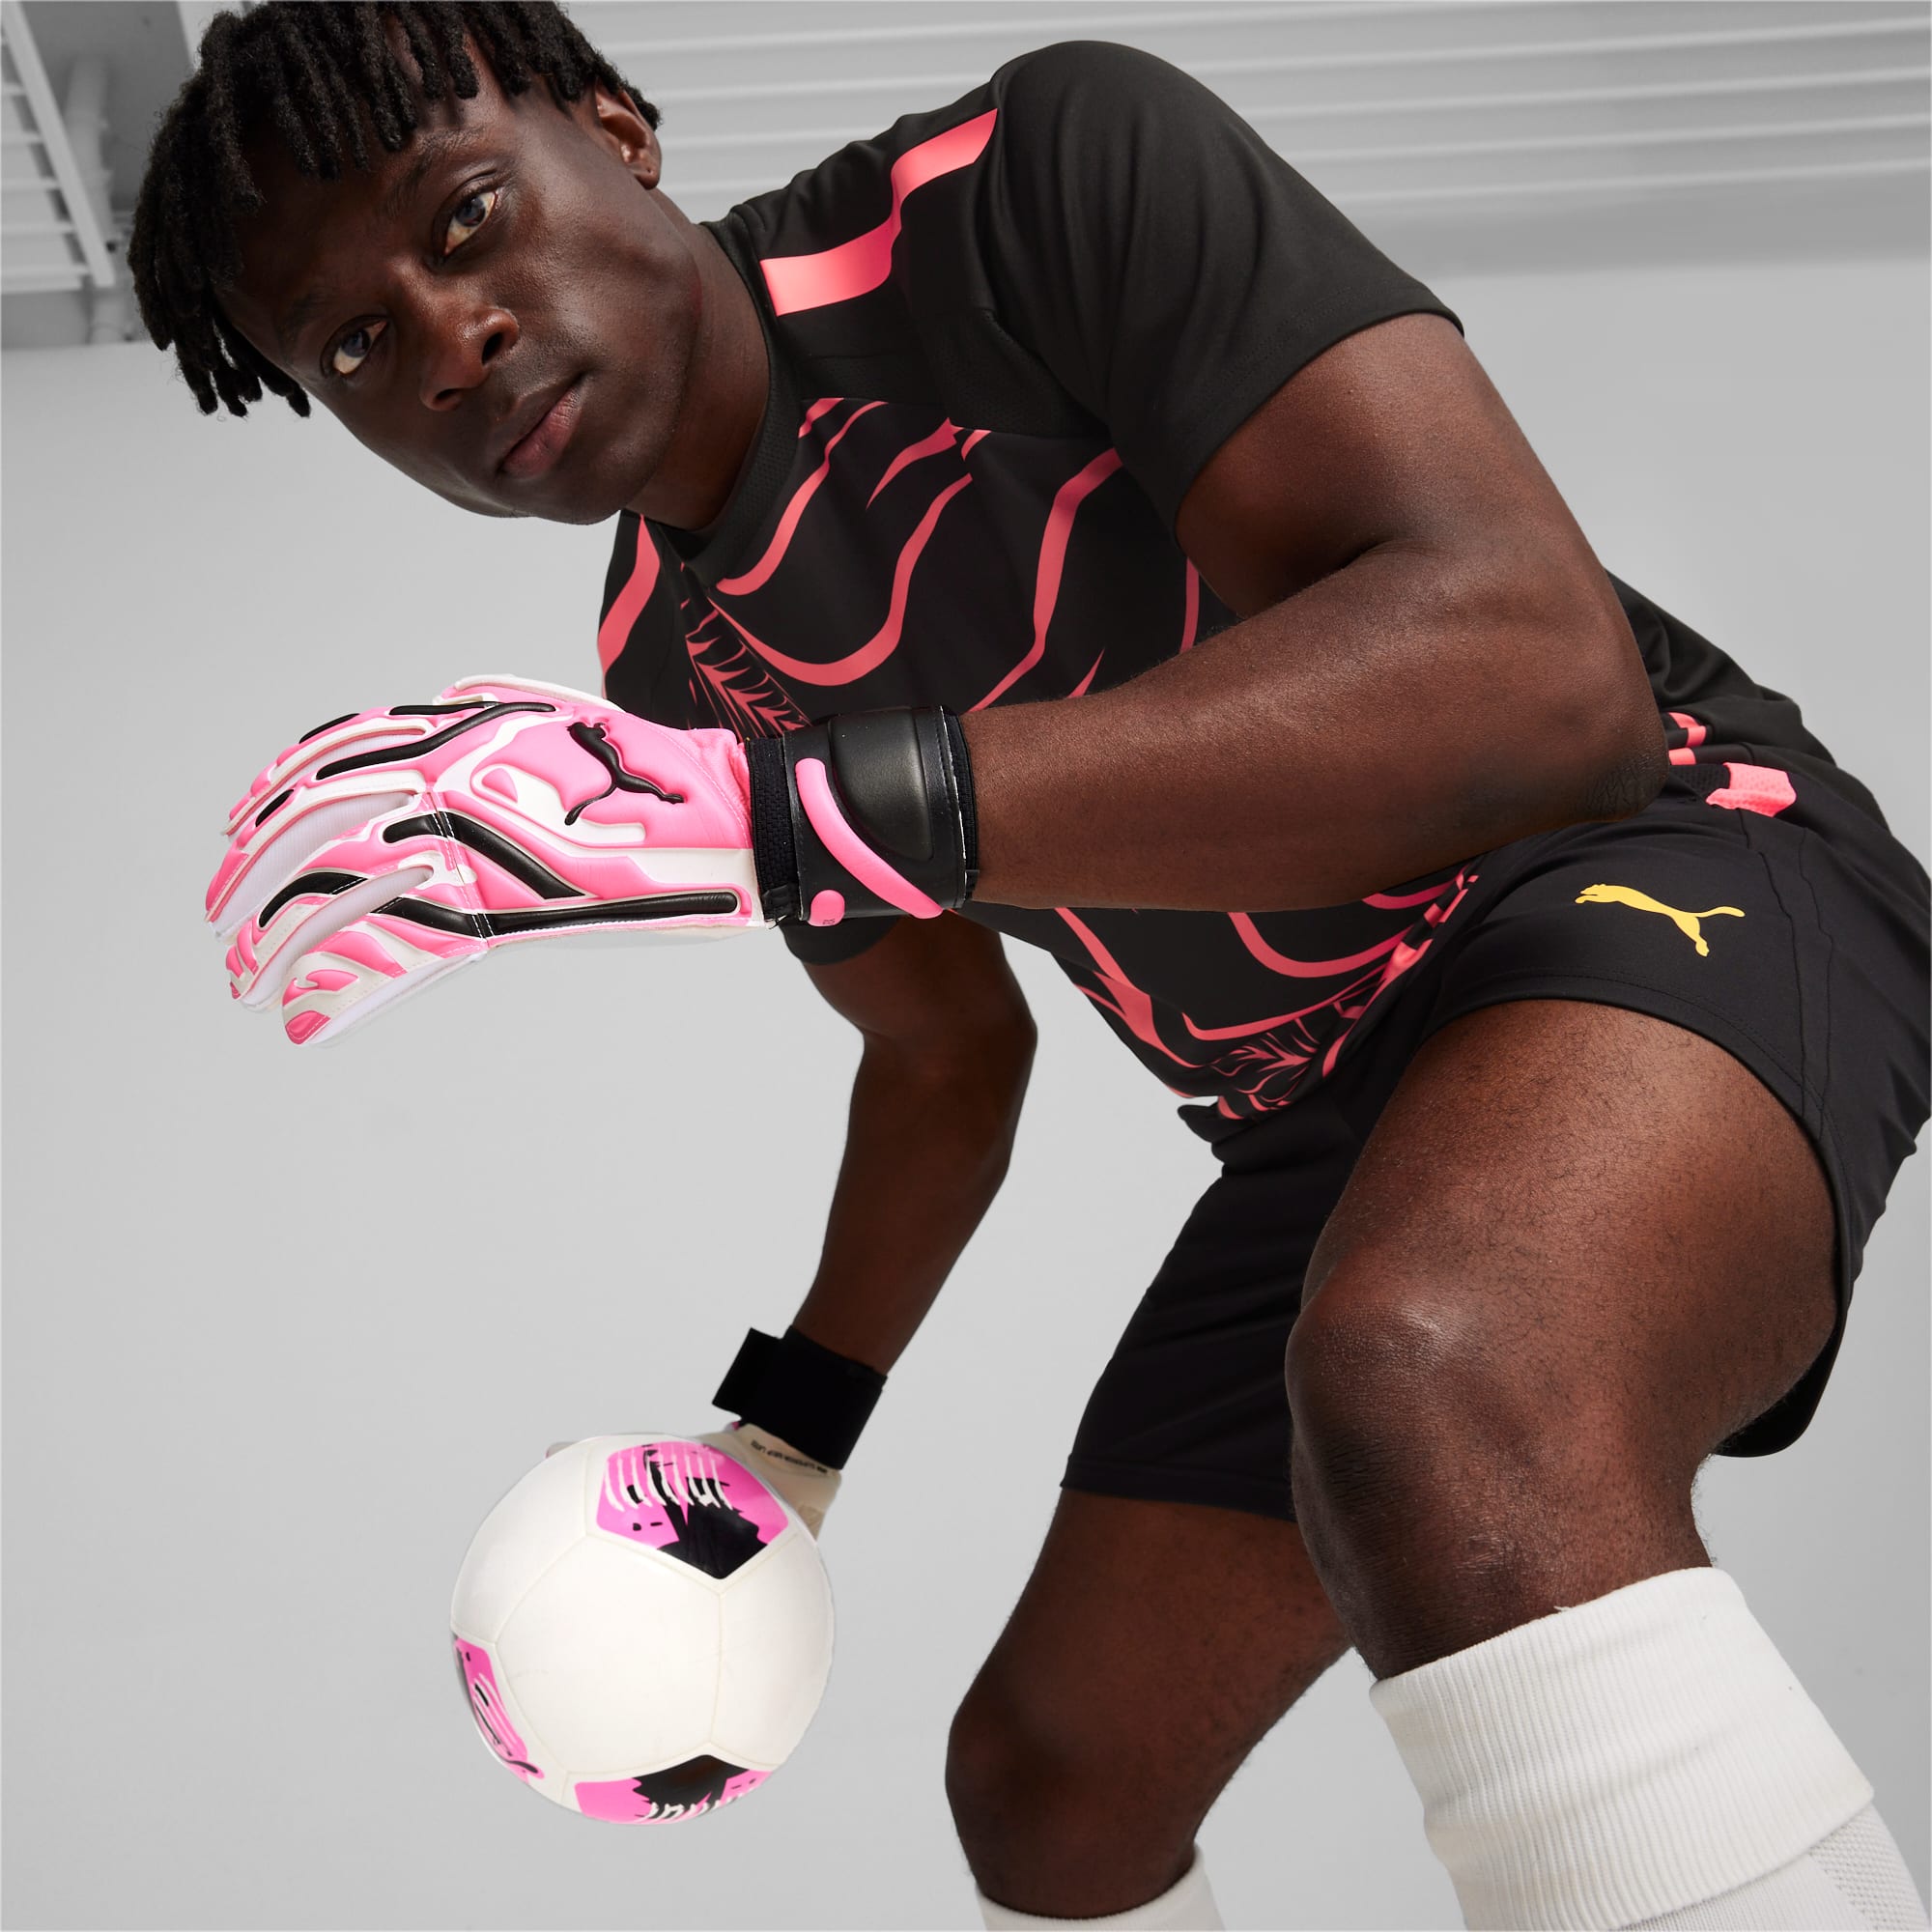 Women's PUMA Ultra Pro Rc Goalkeeper Gloves, Poison Pink/White/Black, Size 9, Accessories